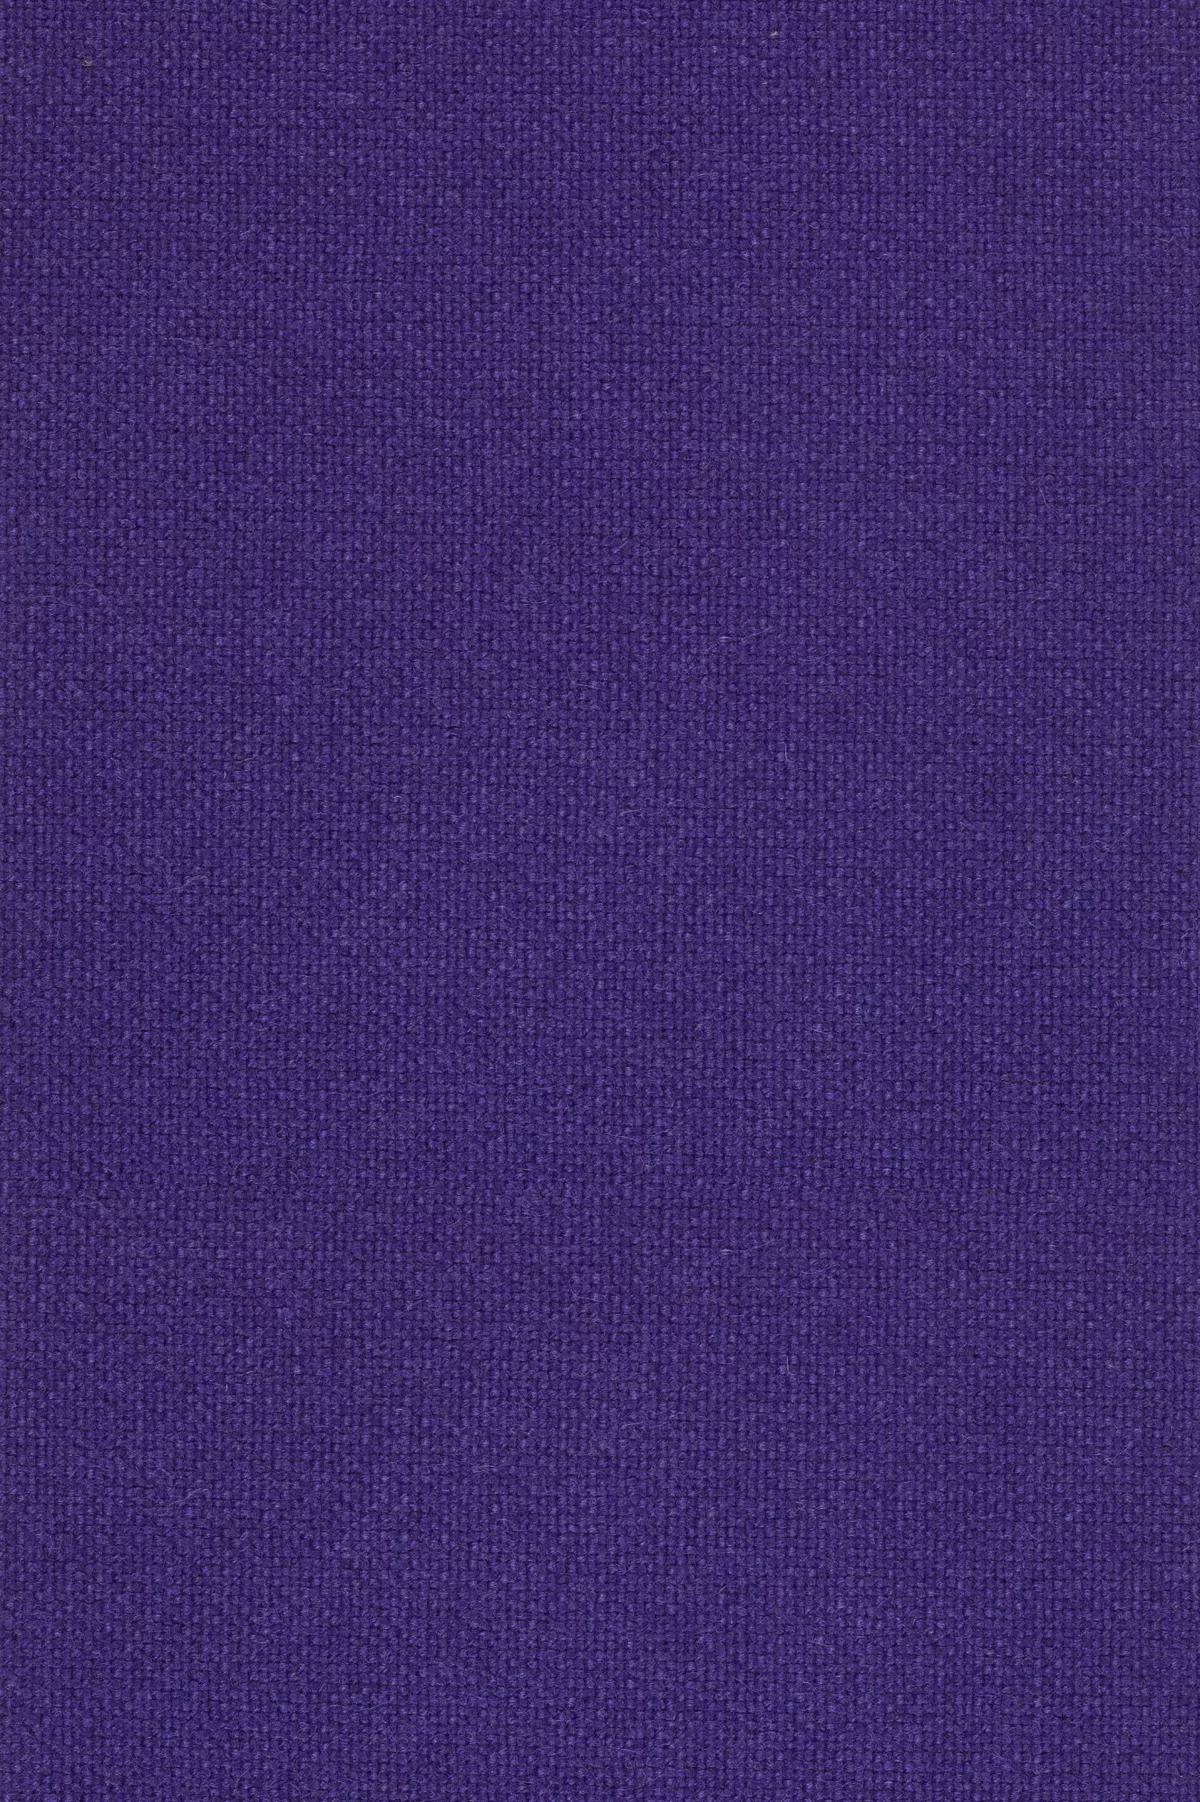 Fabric sample Hallingdal 65 702 blue